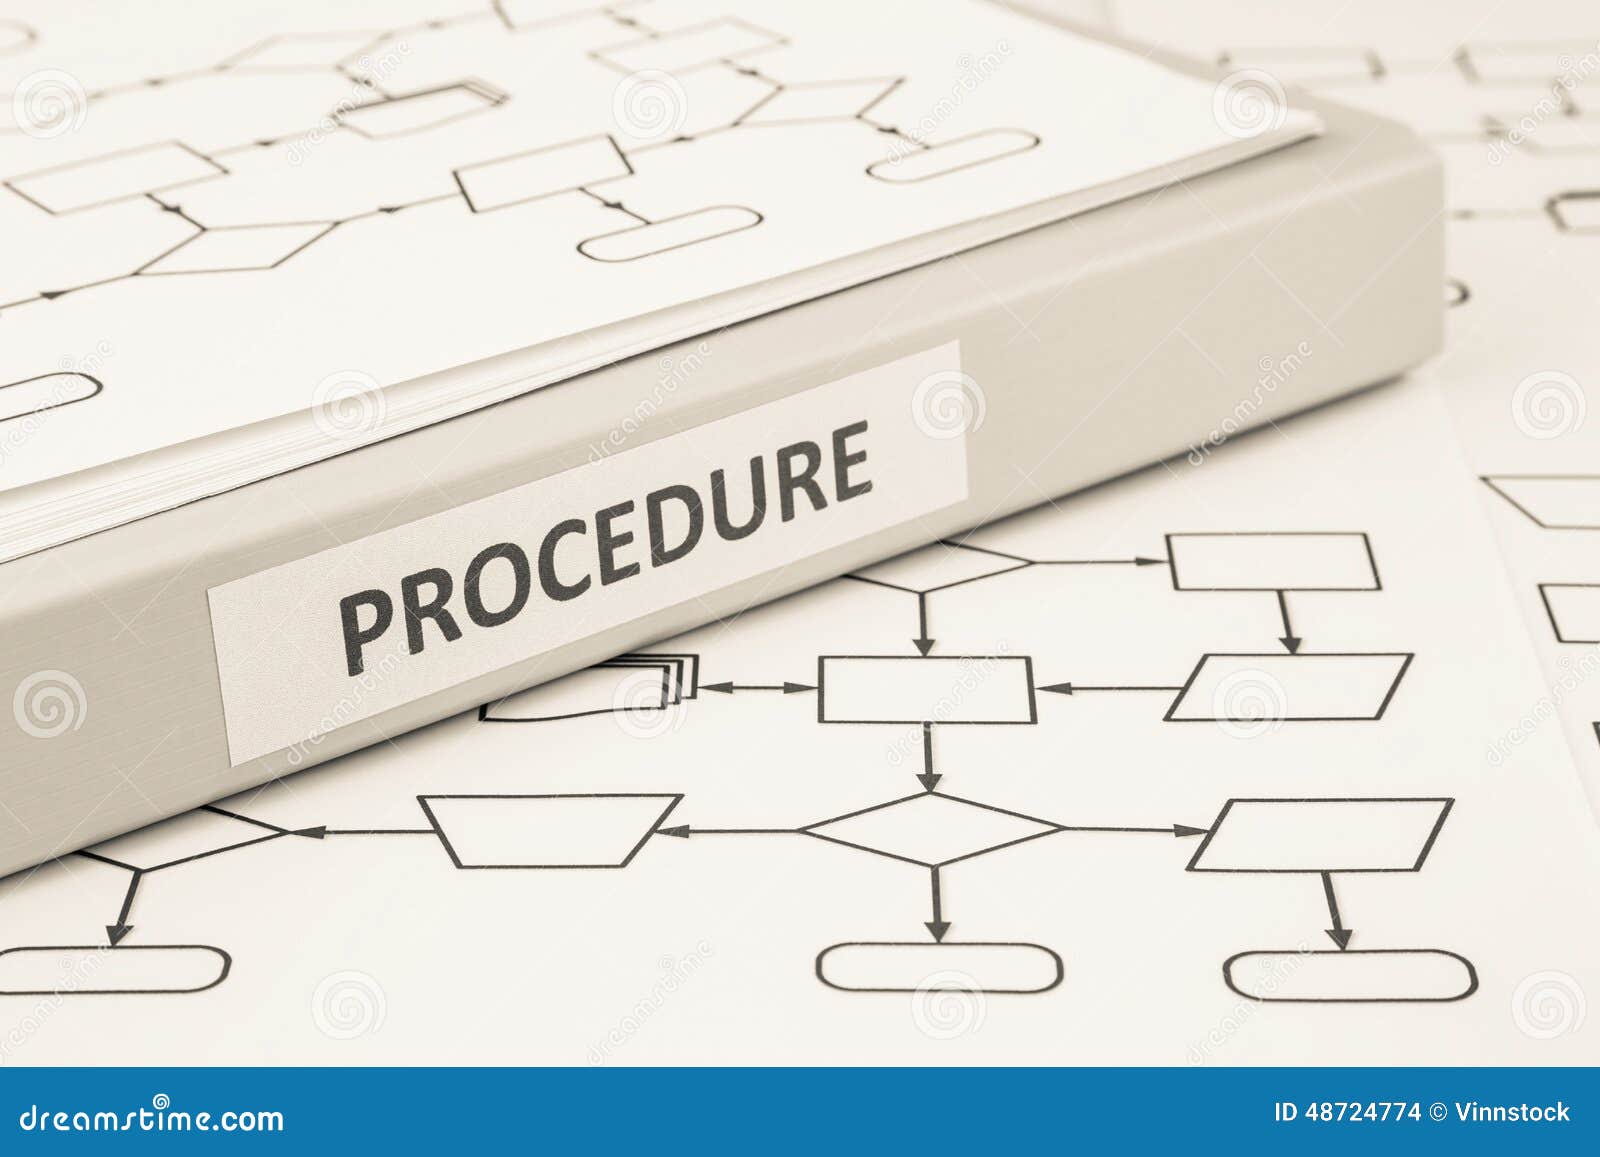 procedure process concept for work instruction